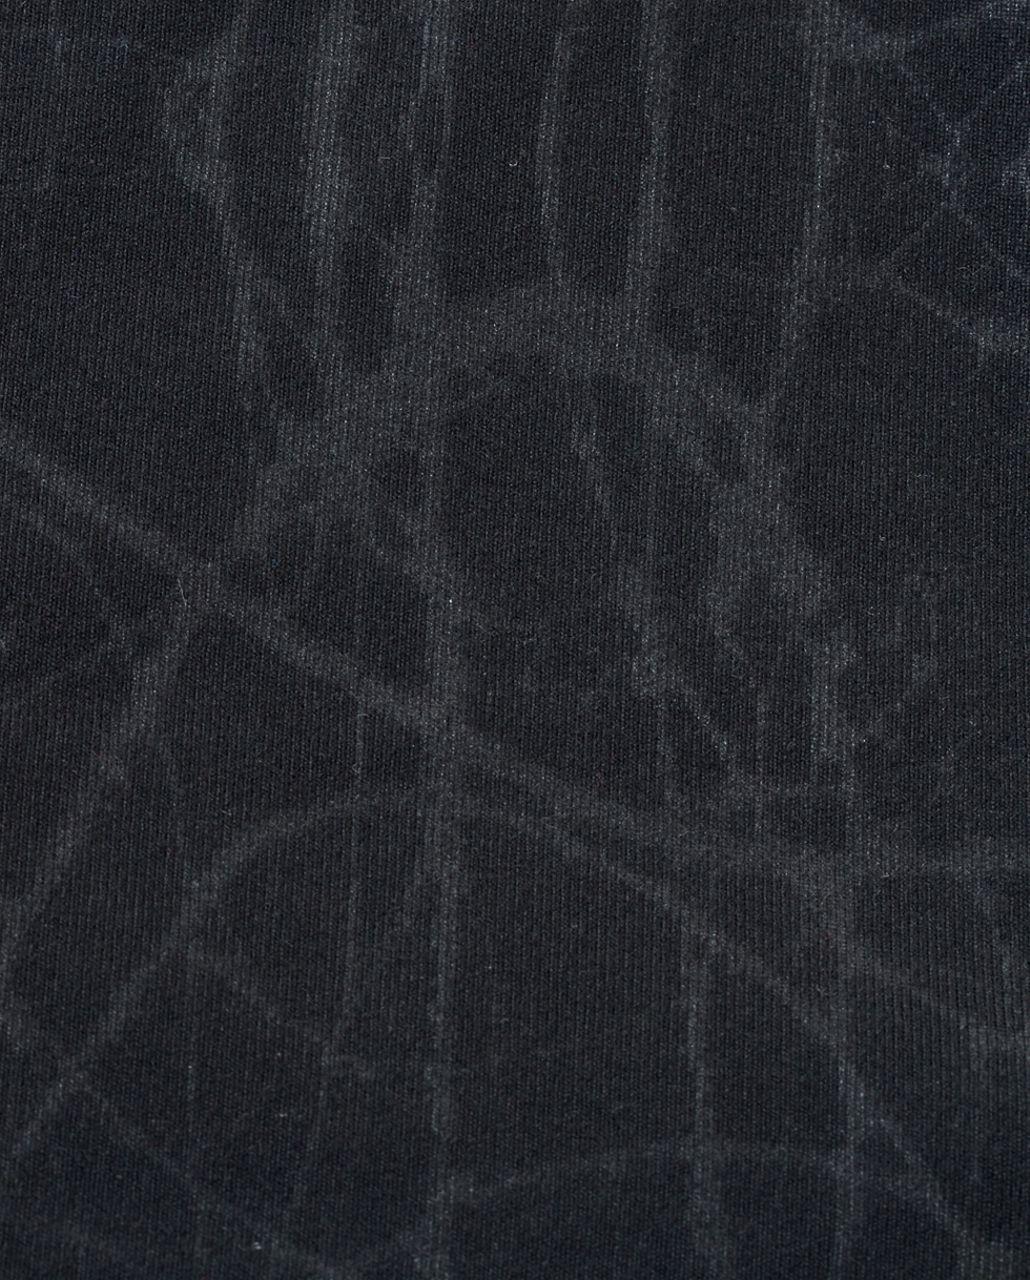 Lululemon Define Jacket - Black Glacier Lace Embossed /  Black